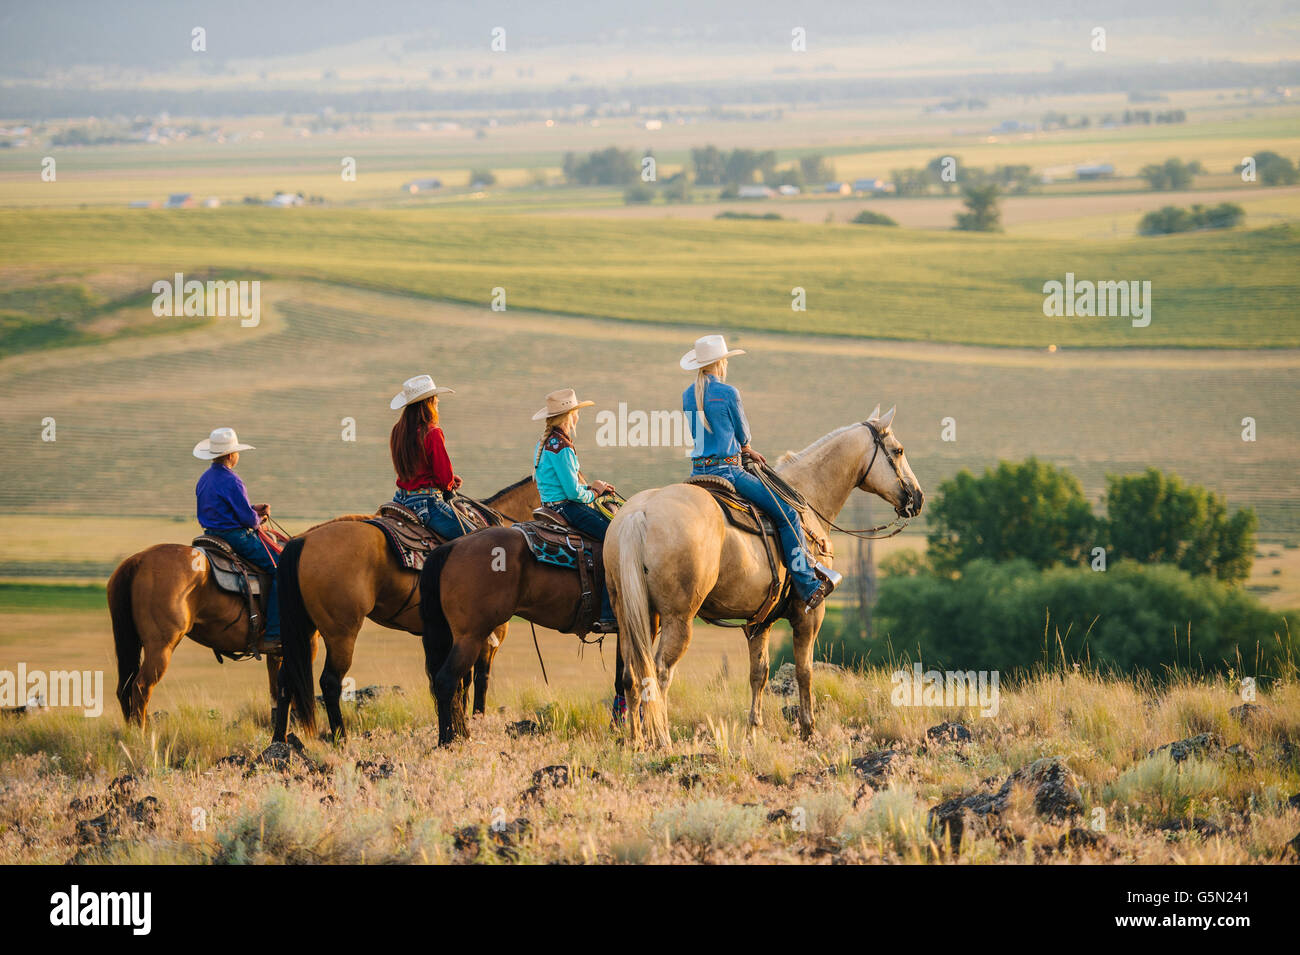 Cowboy and cowgirls on horseback admiring rural landscape Stock Photo